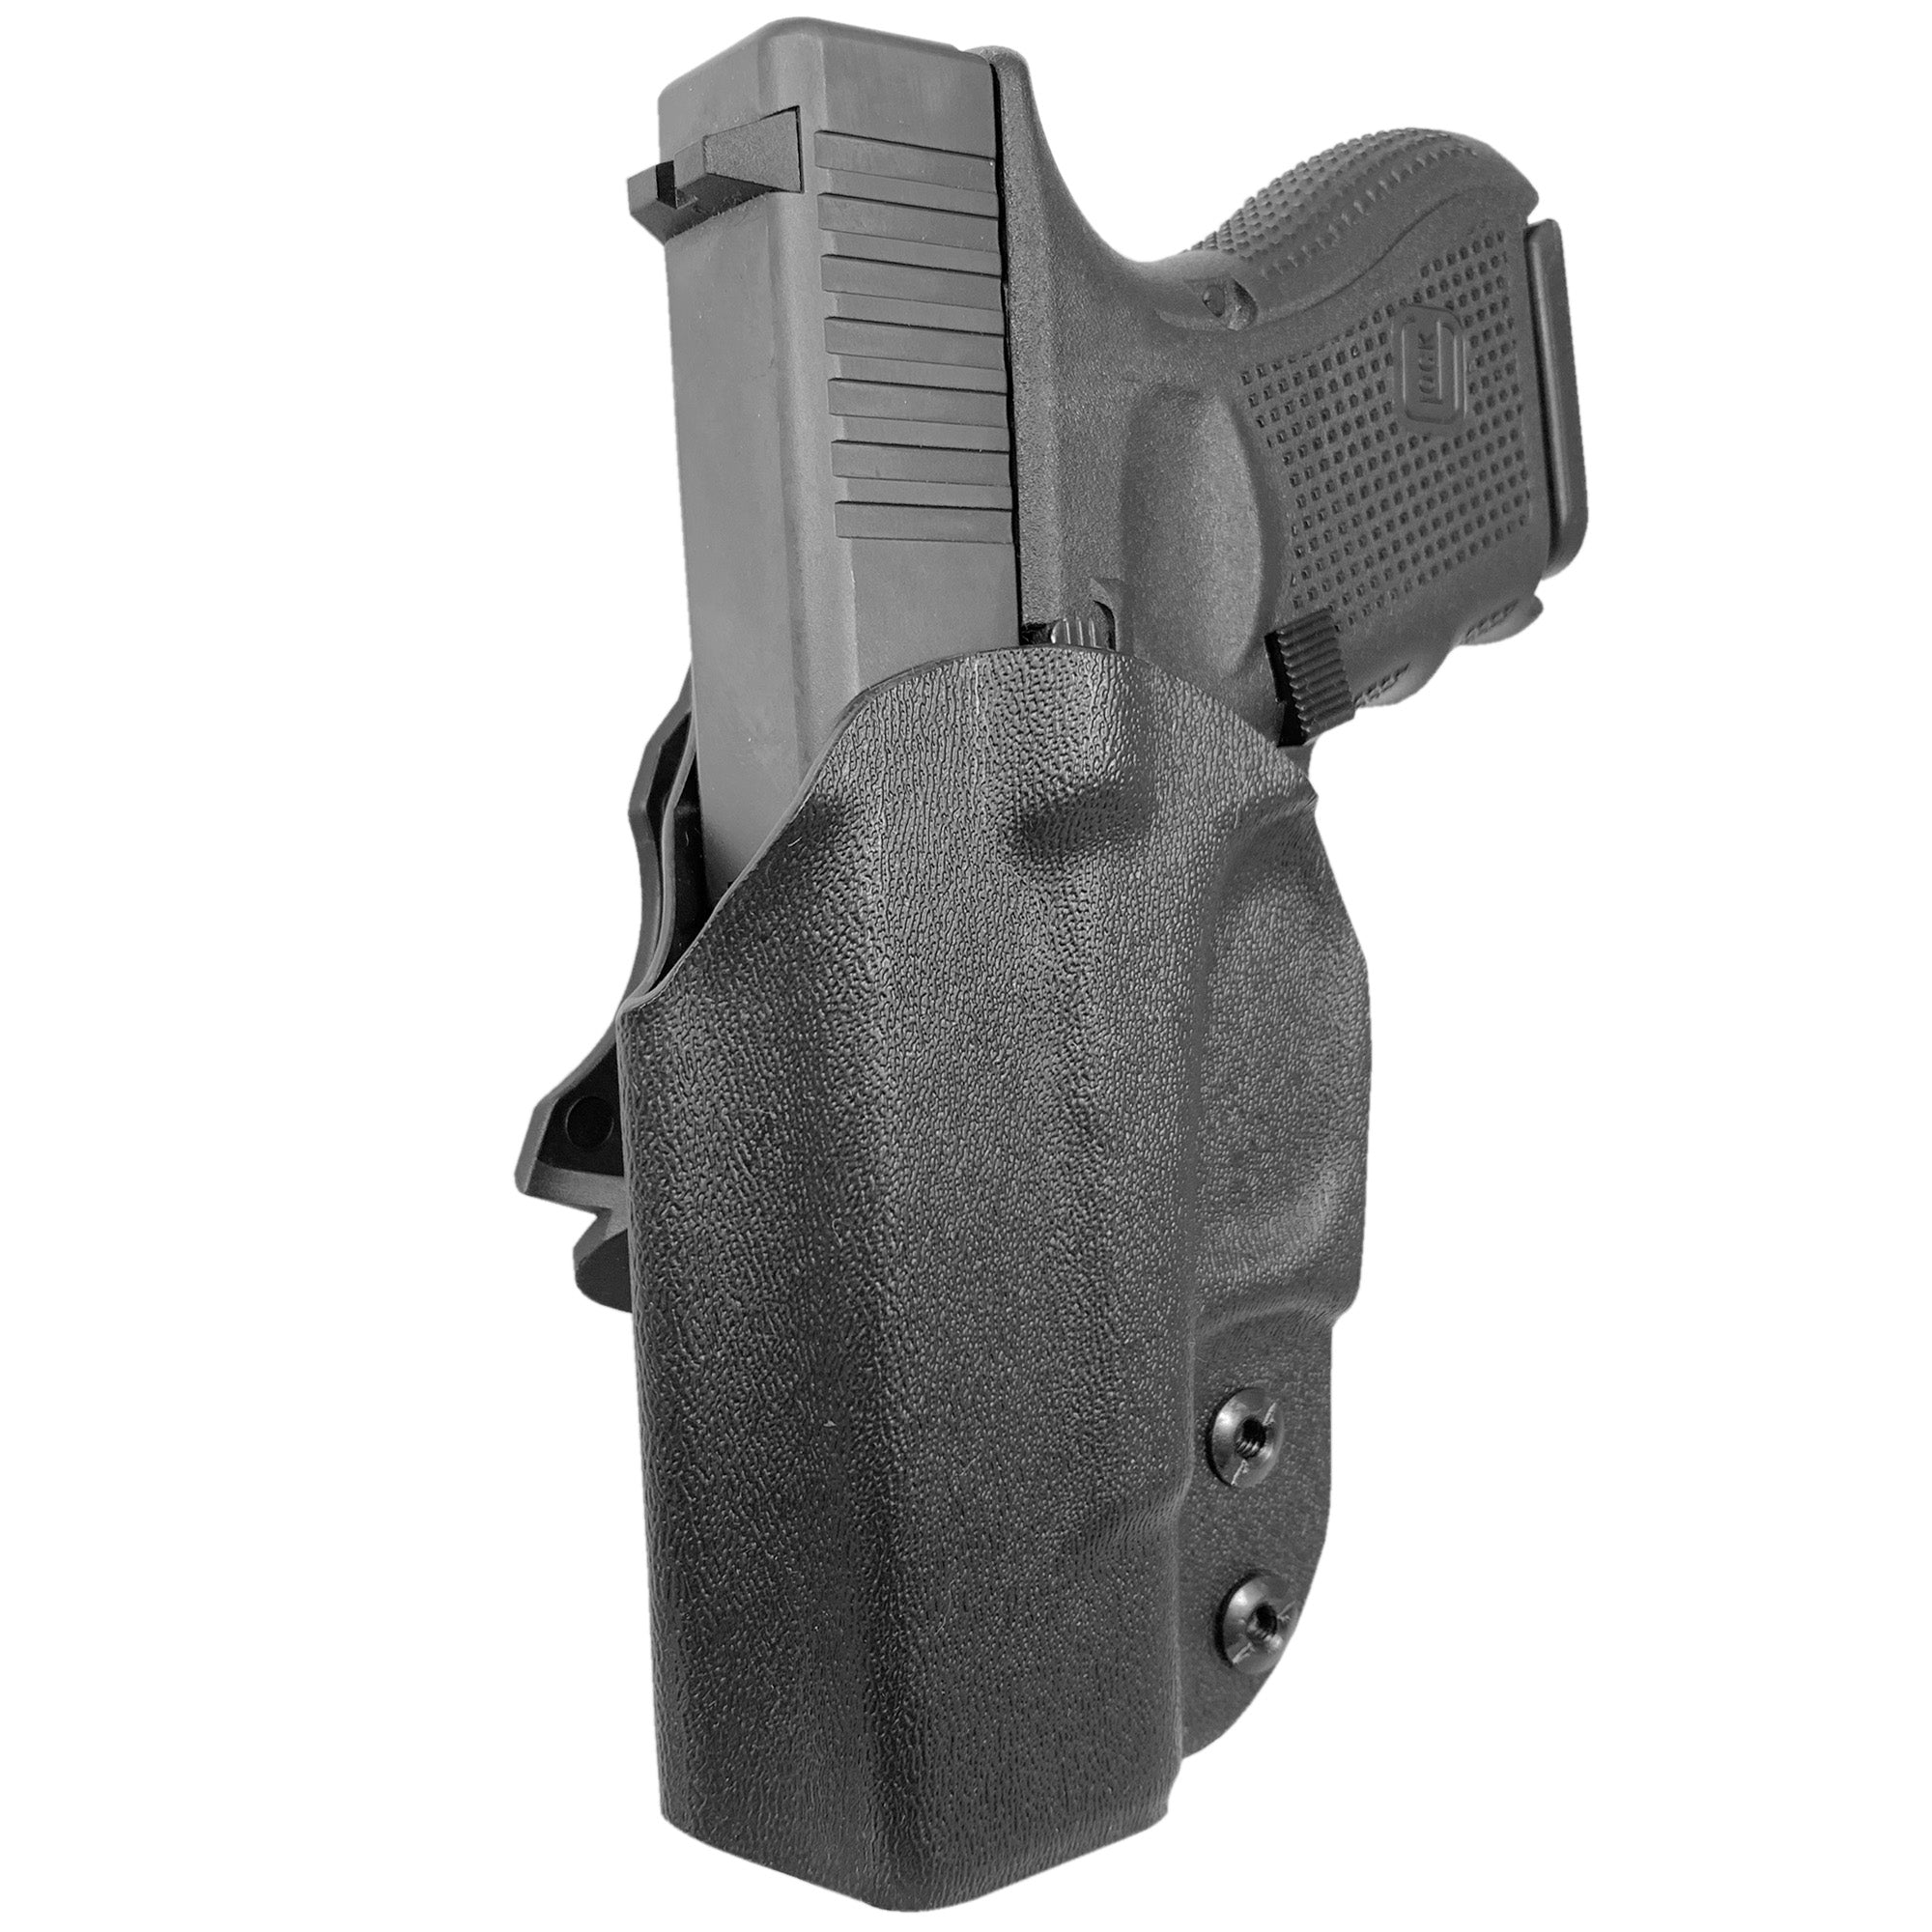 Glock 26, 27, 33 IWB Low Profile Holster